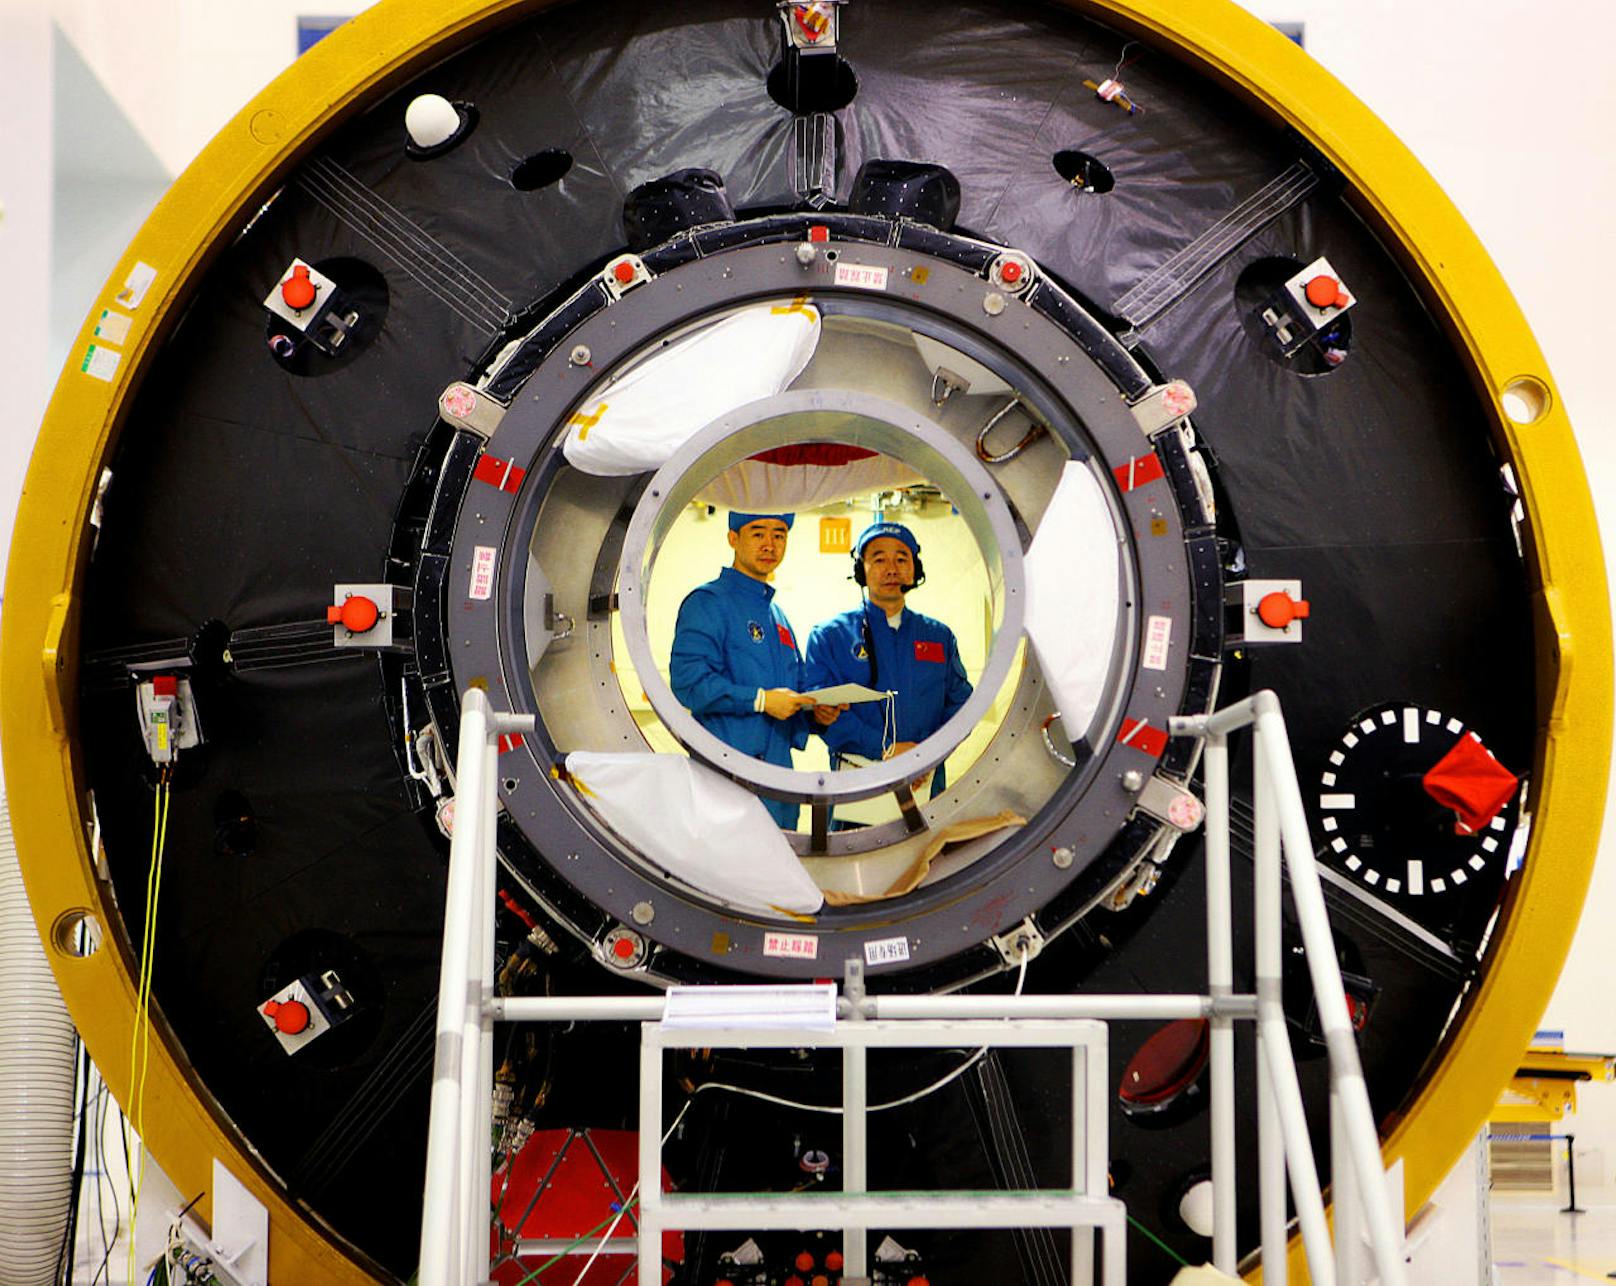 Die Taikonauten Jing Haipeng (r.) and Chen Dong während eines Trainings in dem noch nicht fertiggestellten Weltraumlabor Tiangong-2 am Aug. 28, 2015.